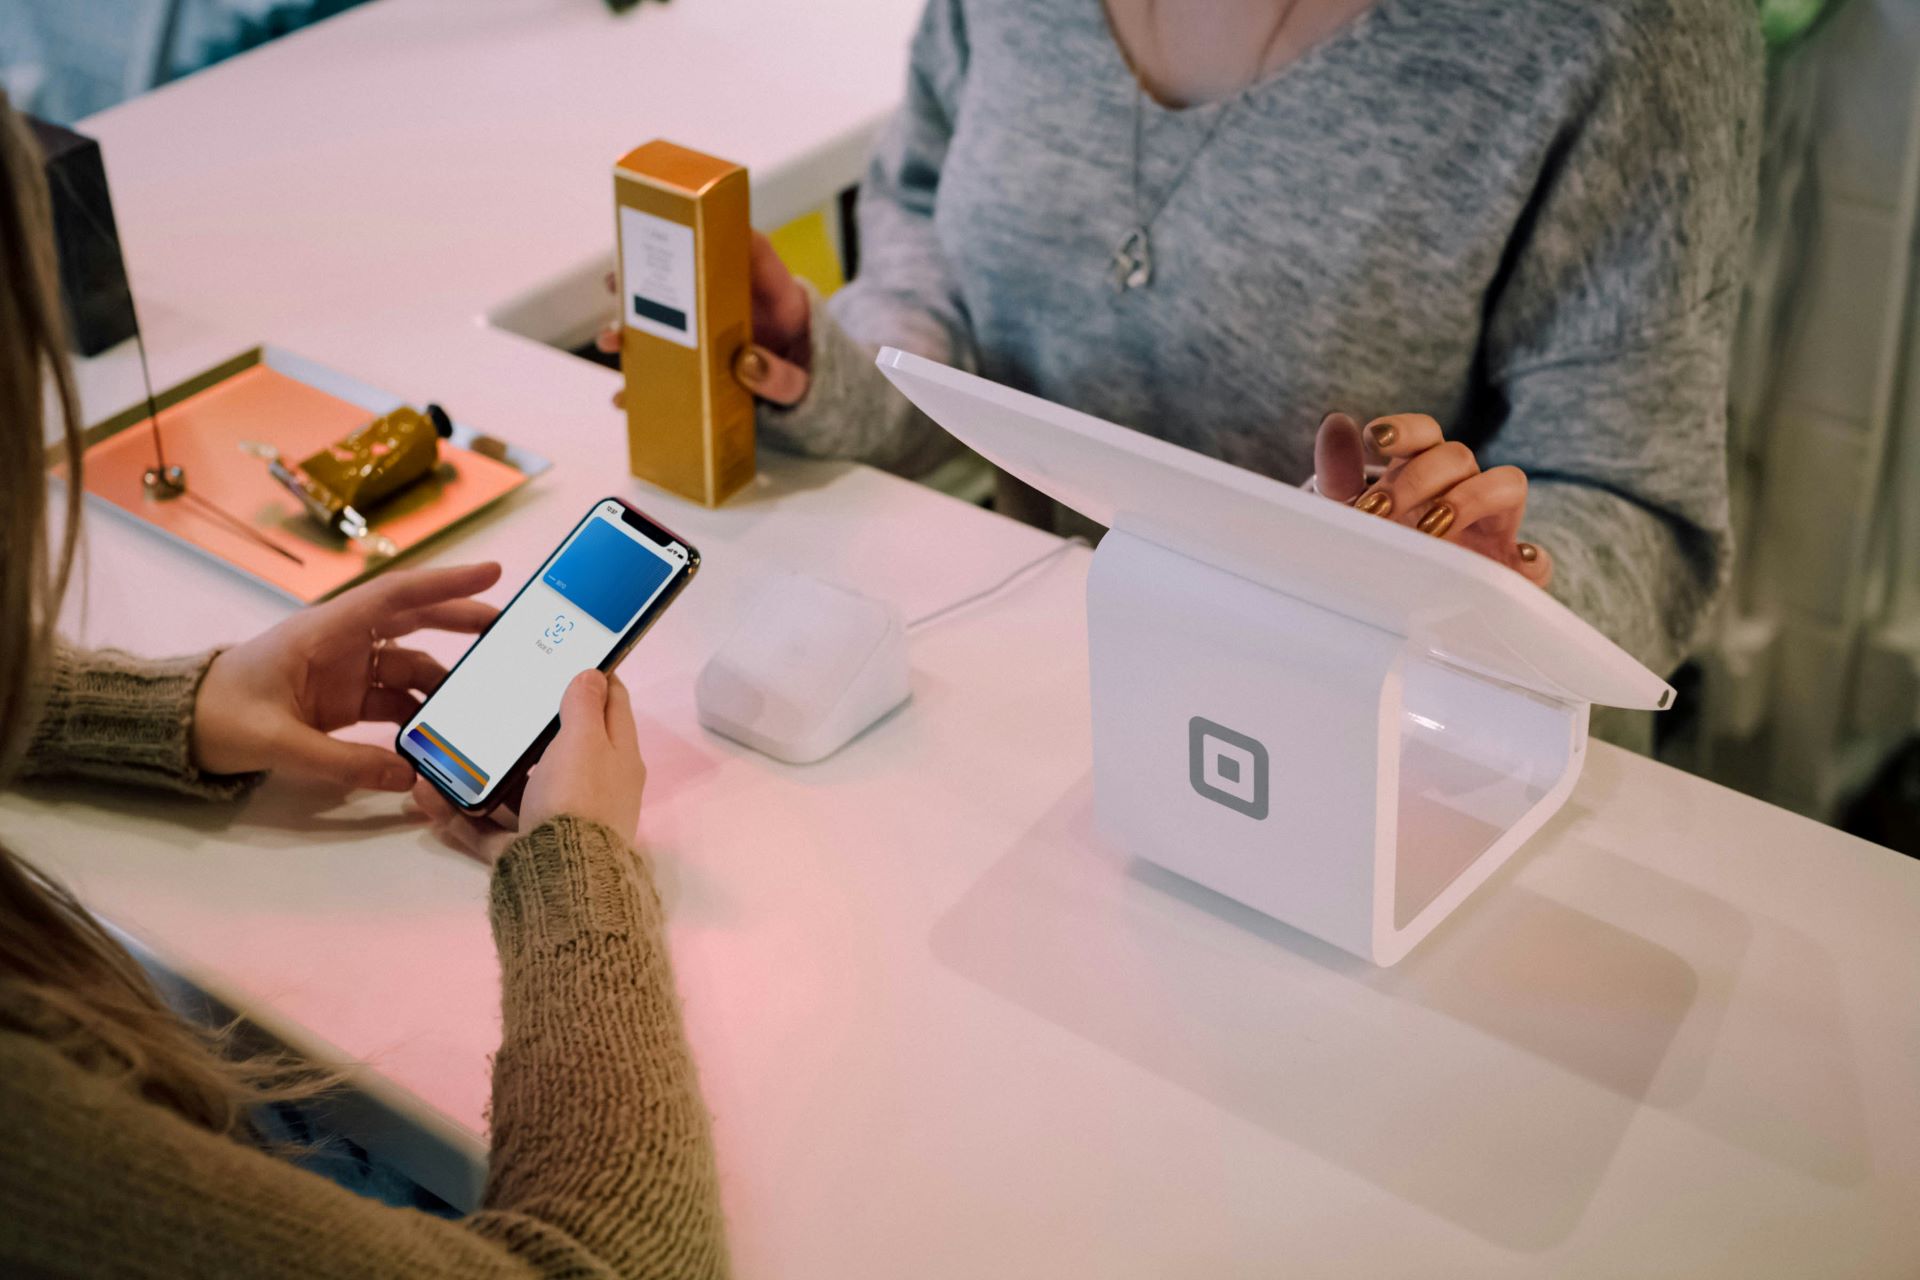 Iphone con Apple Pay abierto intentando pagar en un terminal de pago NFC